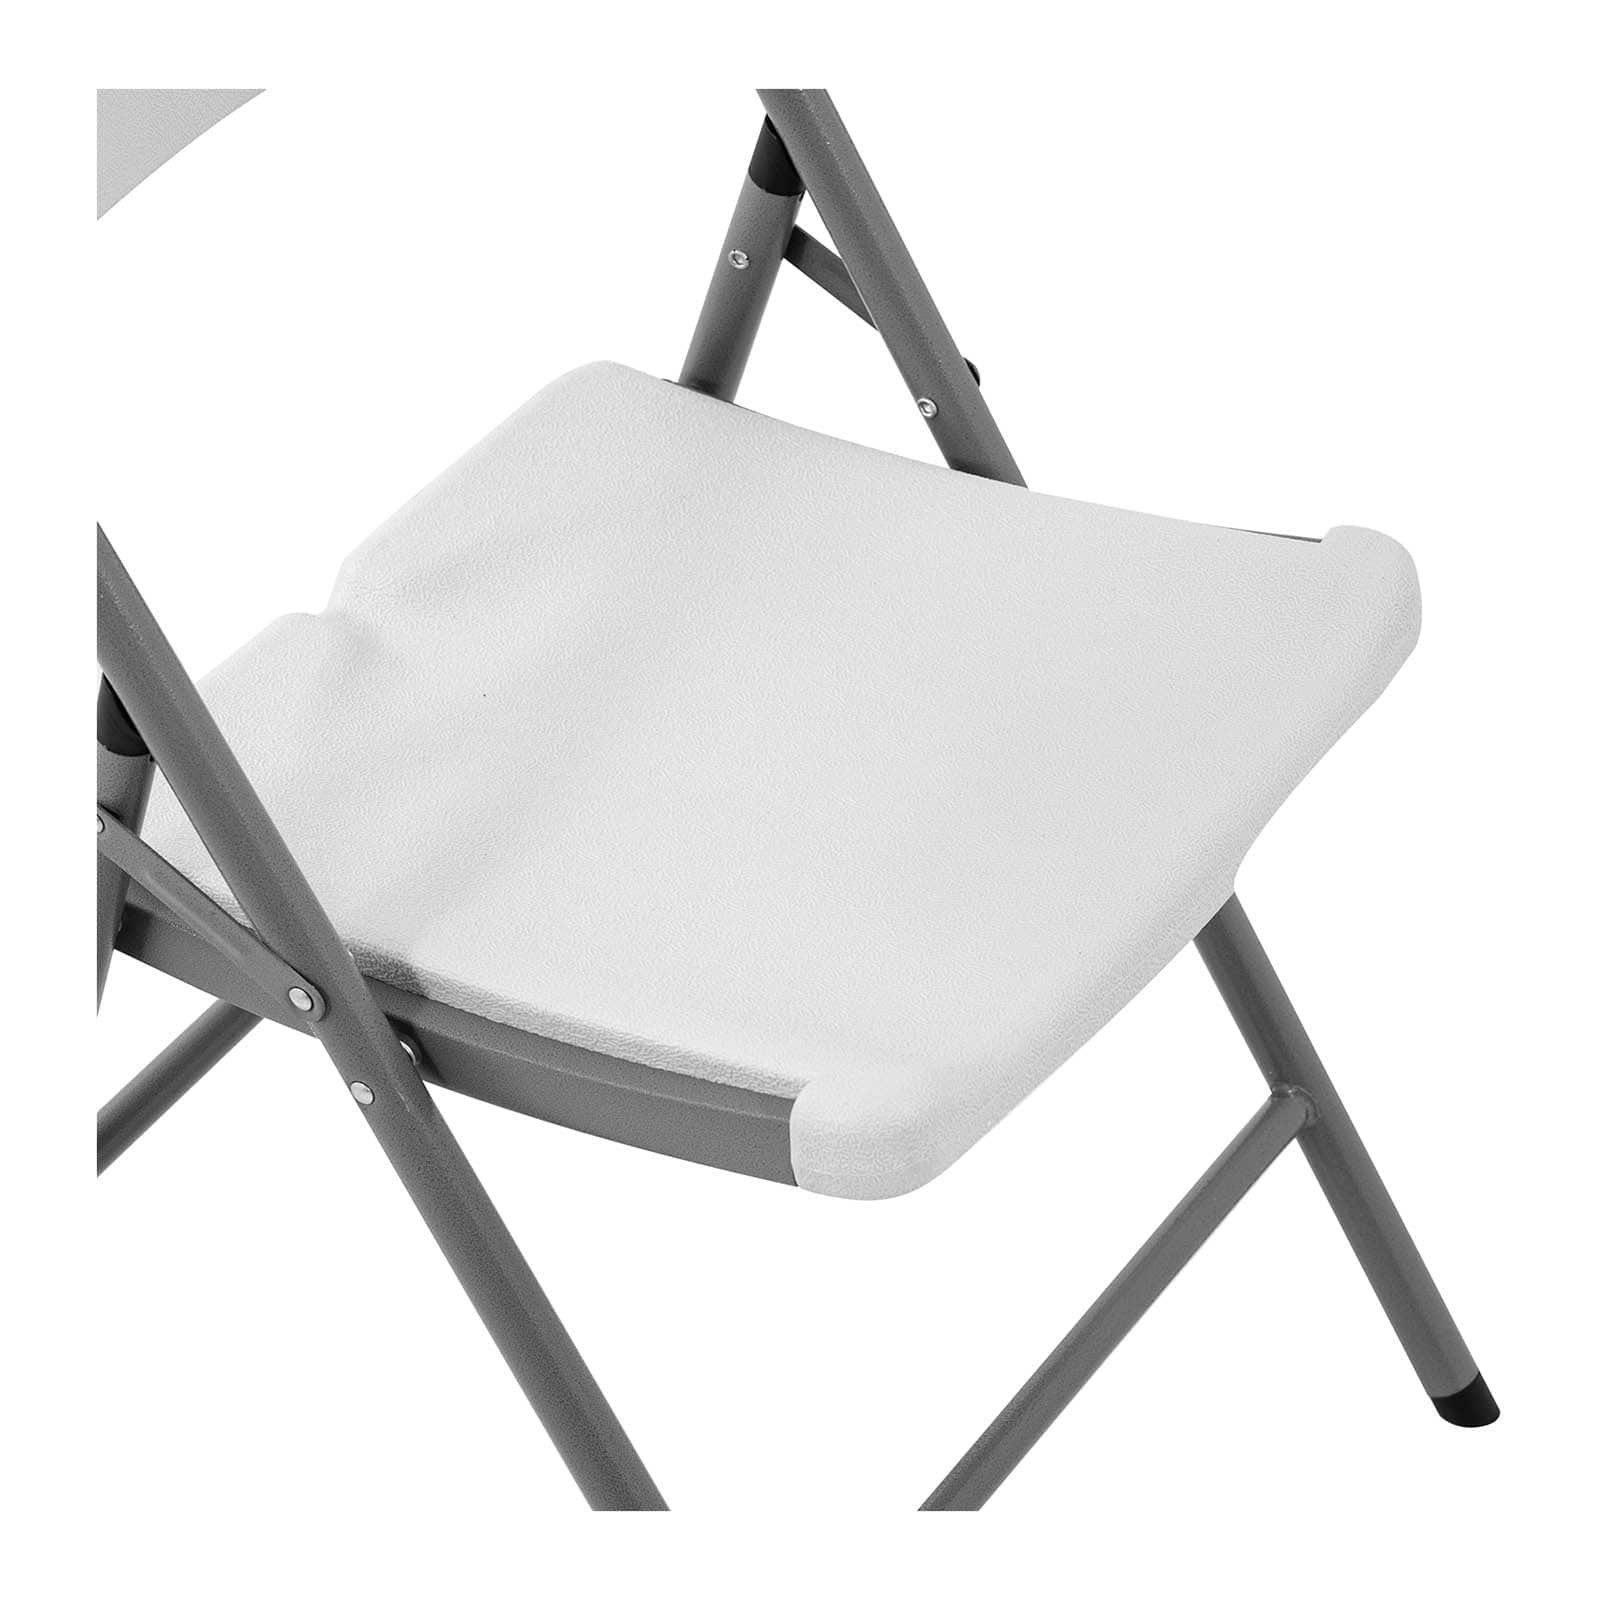 180 Catering Faltstuhl klappbar weiß Stuhl Stahl Klappstuhl Polyethylen Faltstuhl Royal kg